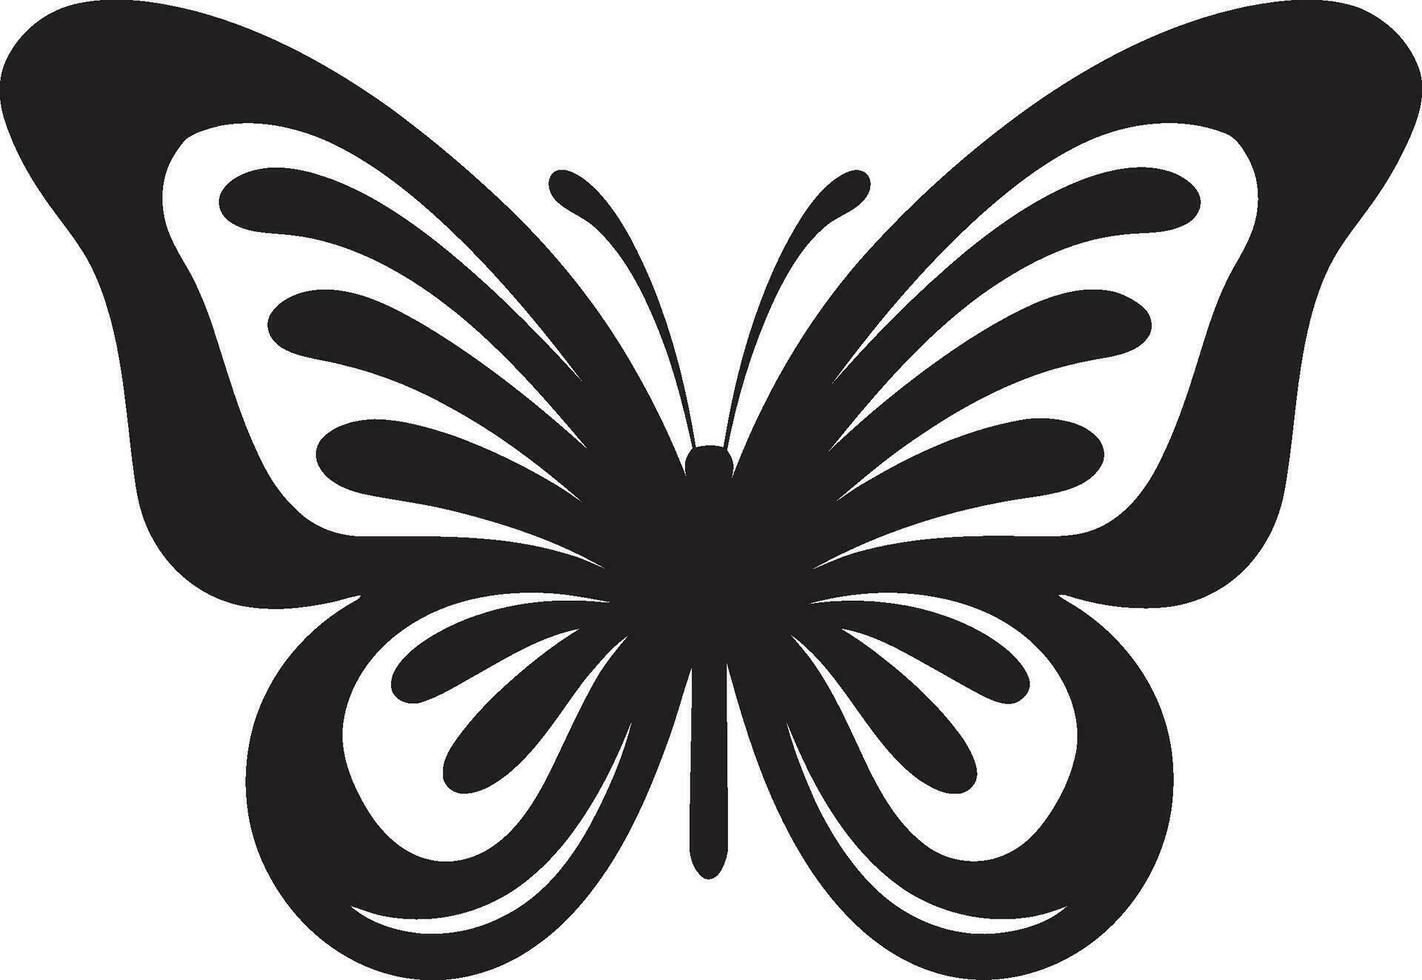 negro mariposa silueta un moderno belleza agraciado complejidad mariposa emblema en noir vector